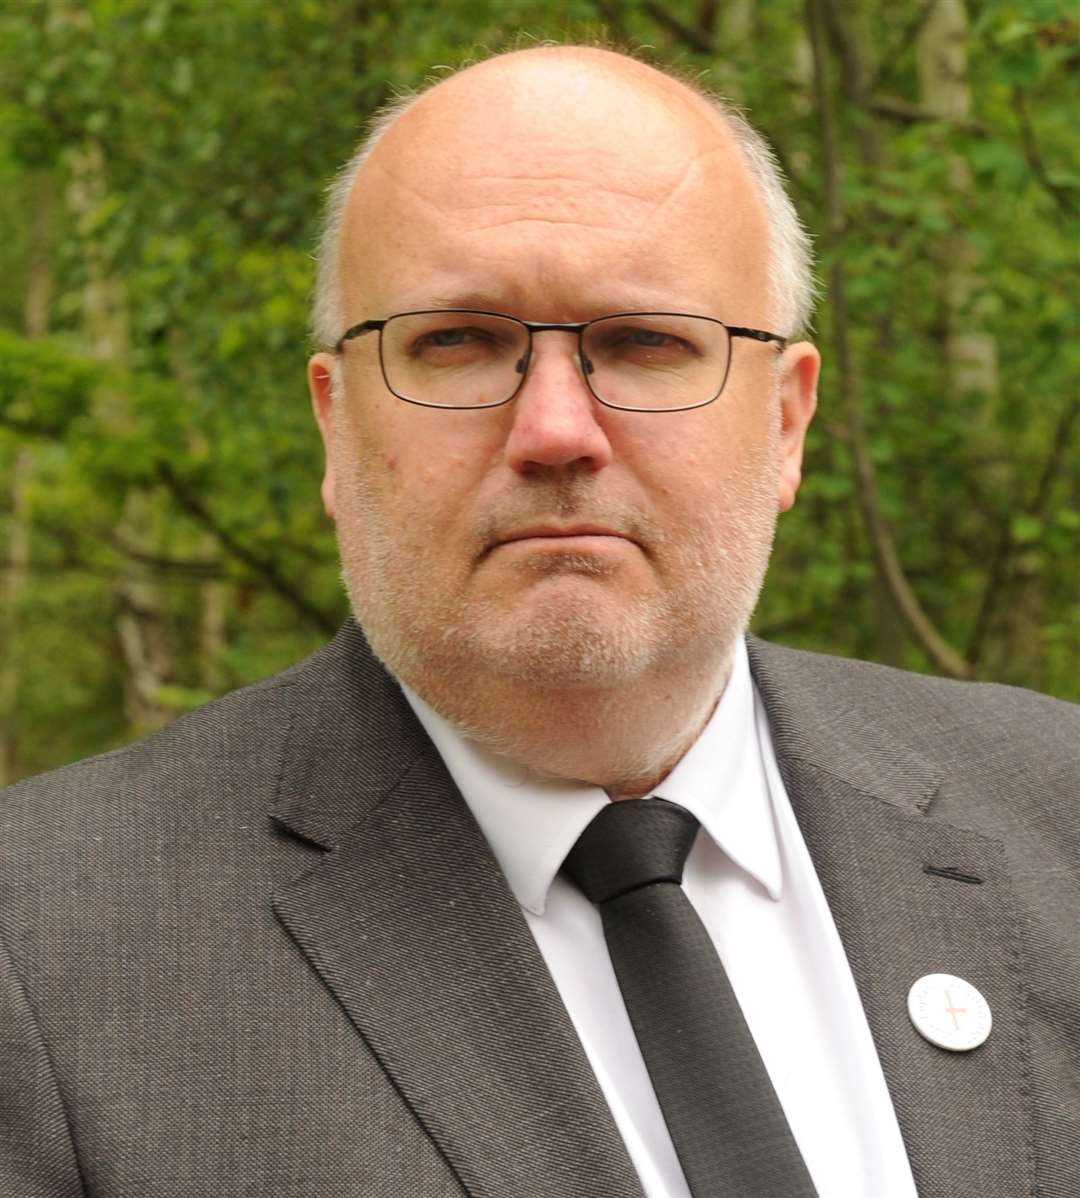 Dartford council leader Jeremy Kite. Picture: Steve Crispe